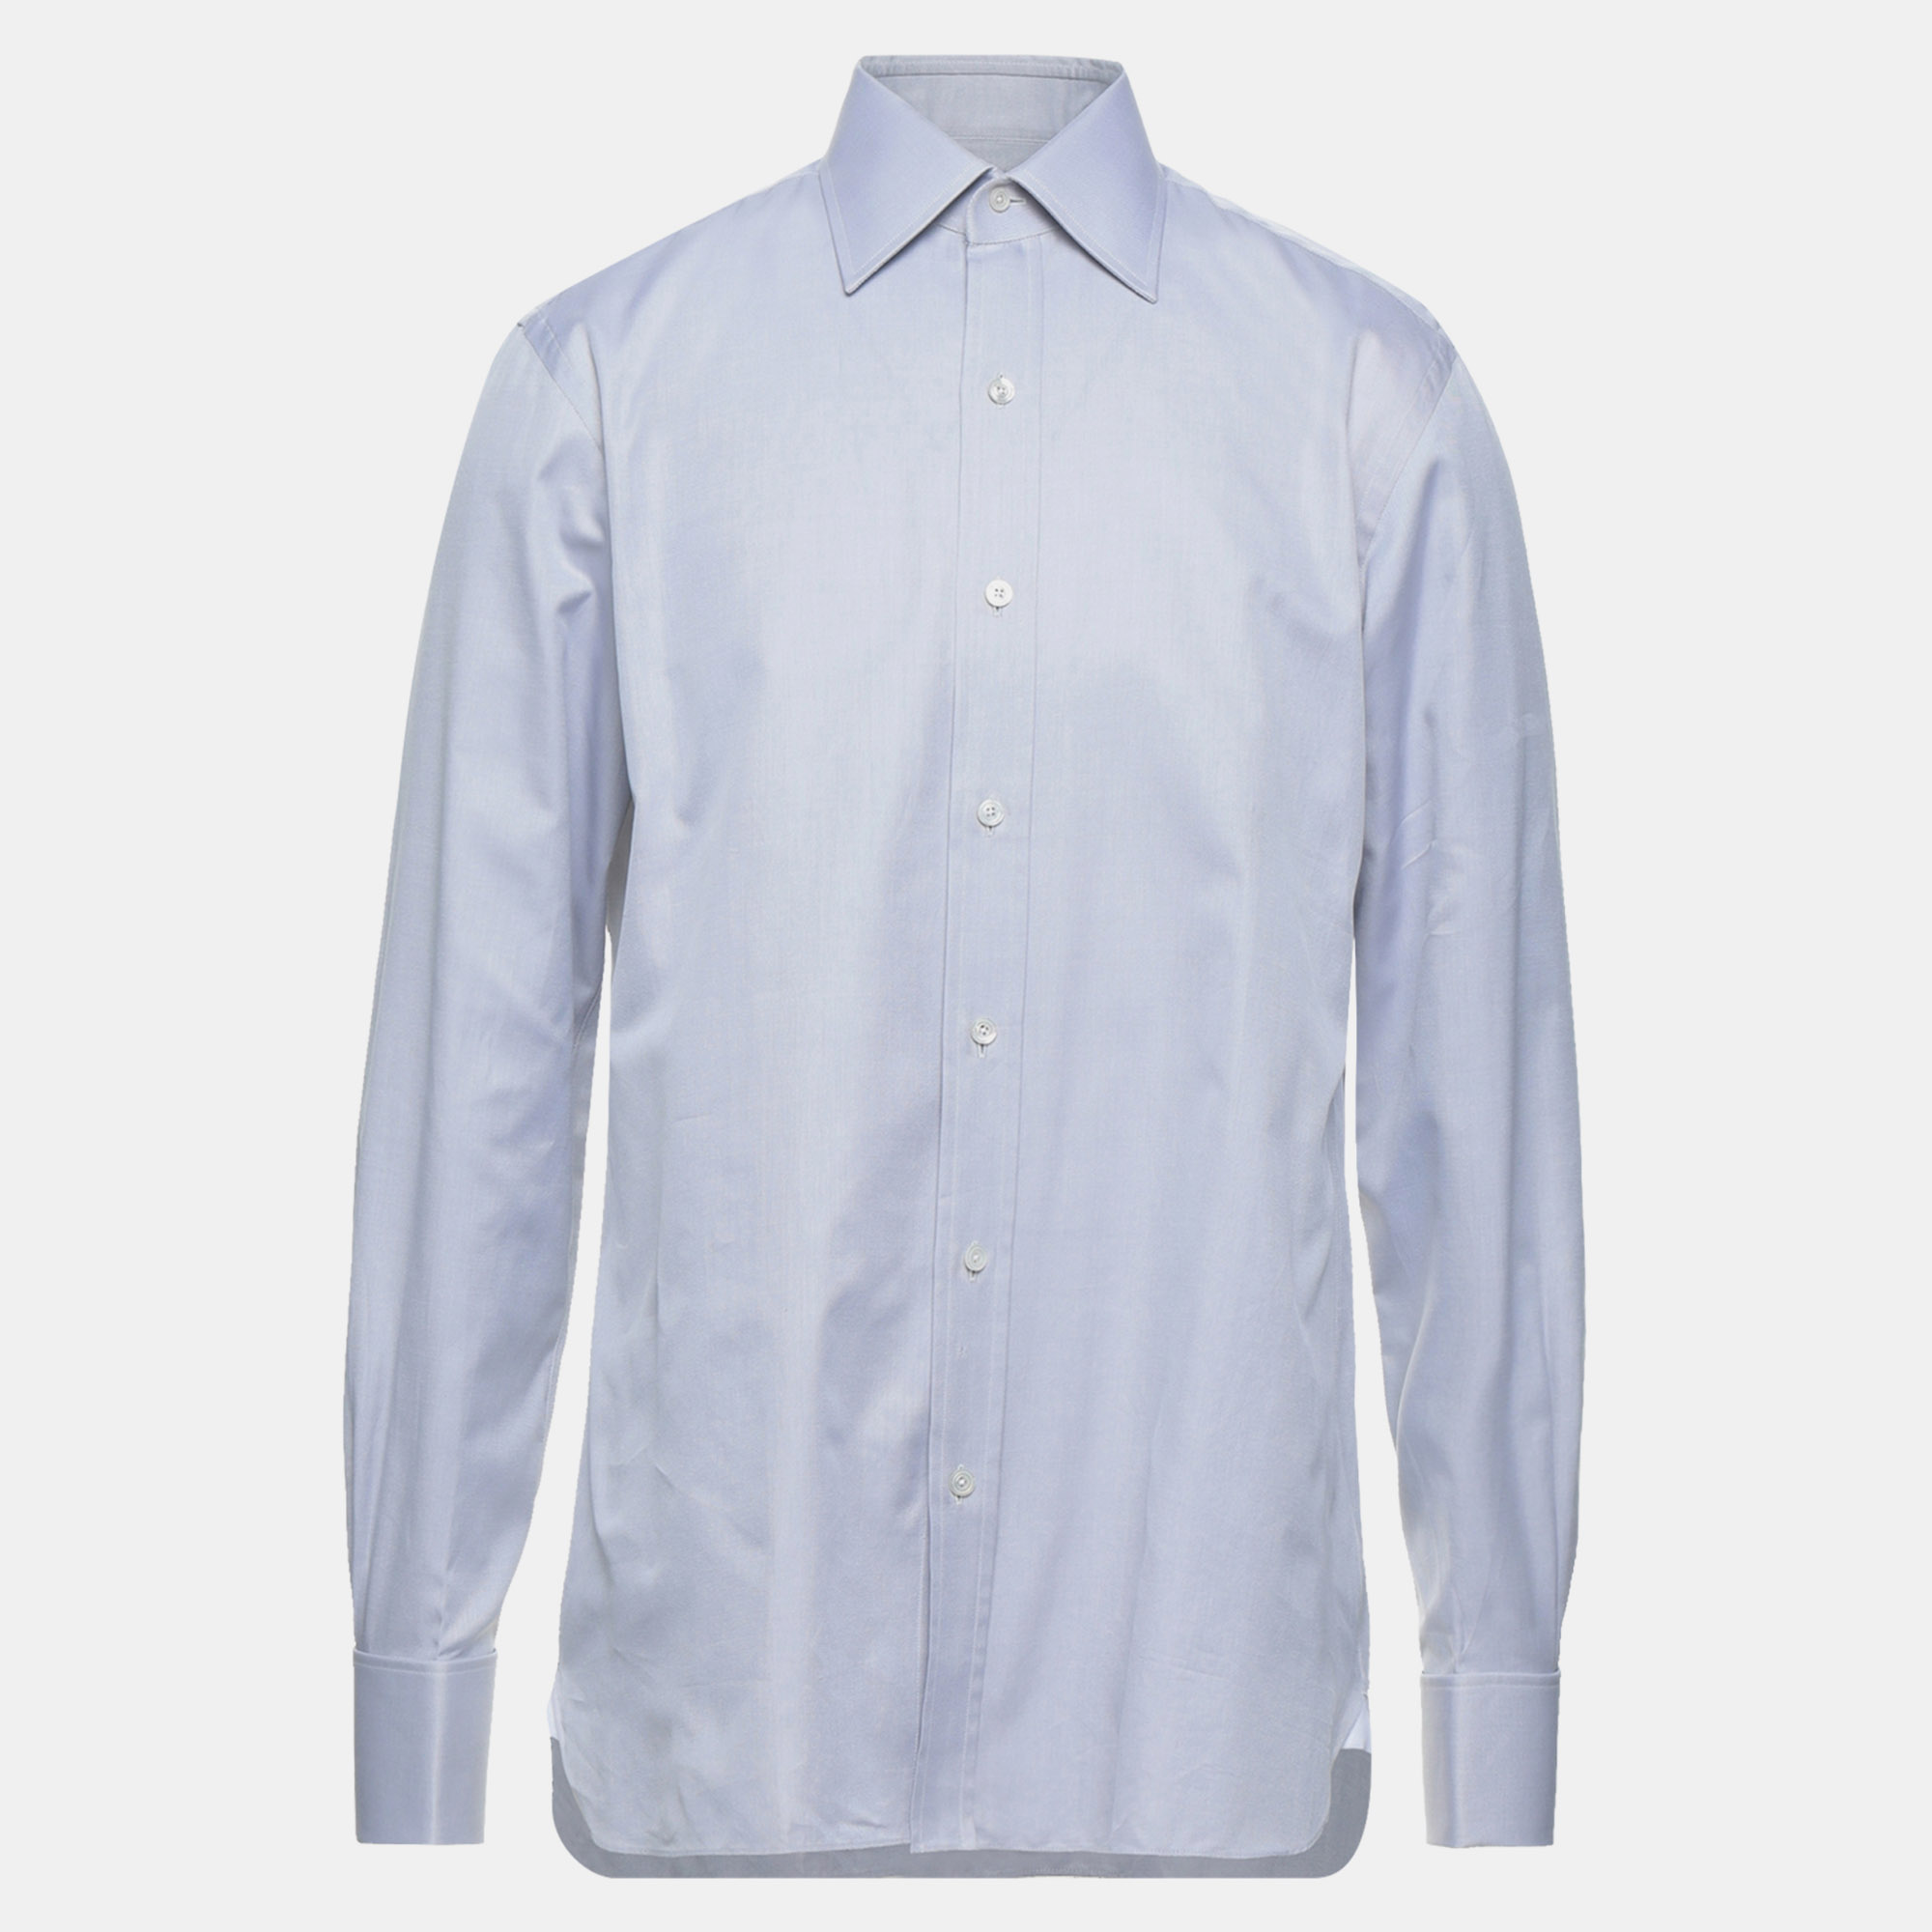 Tom ford cotton shirt 45